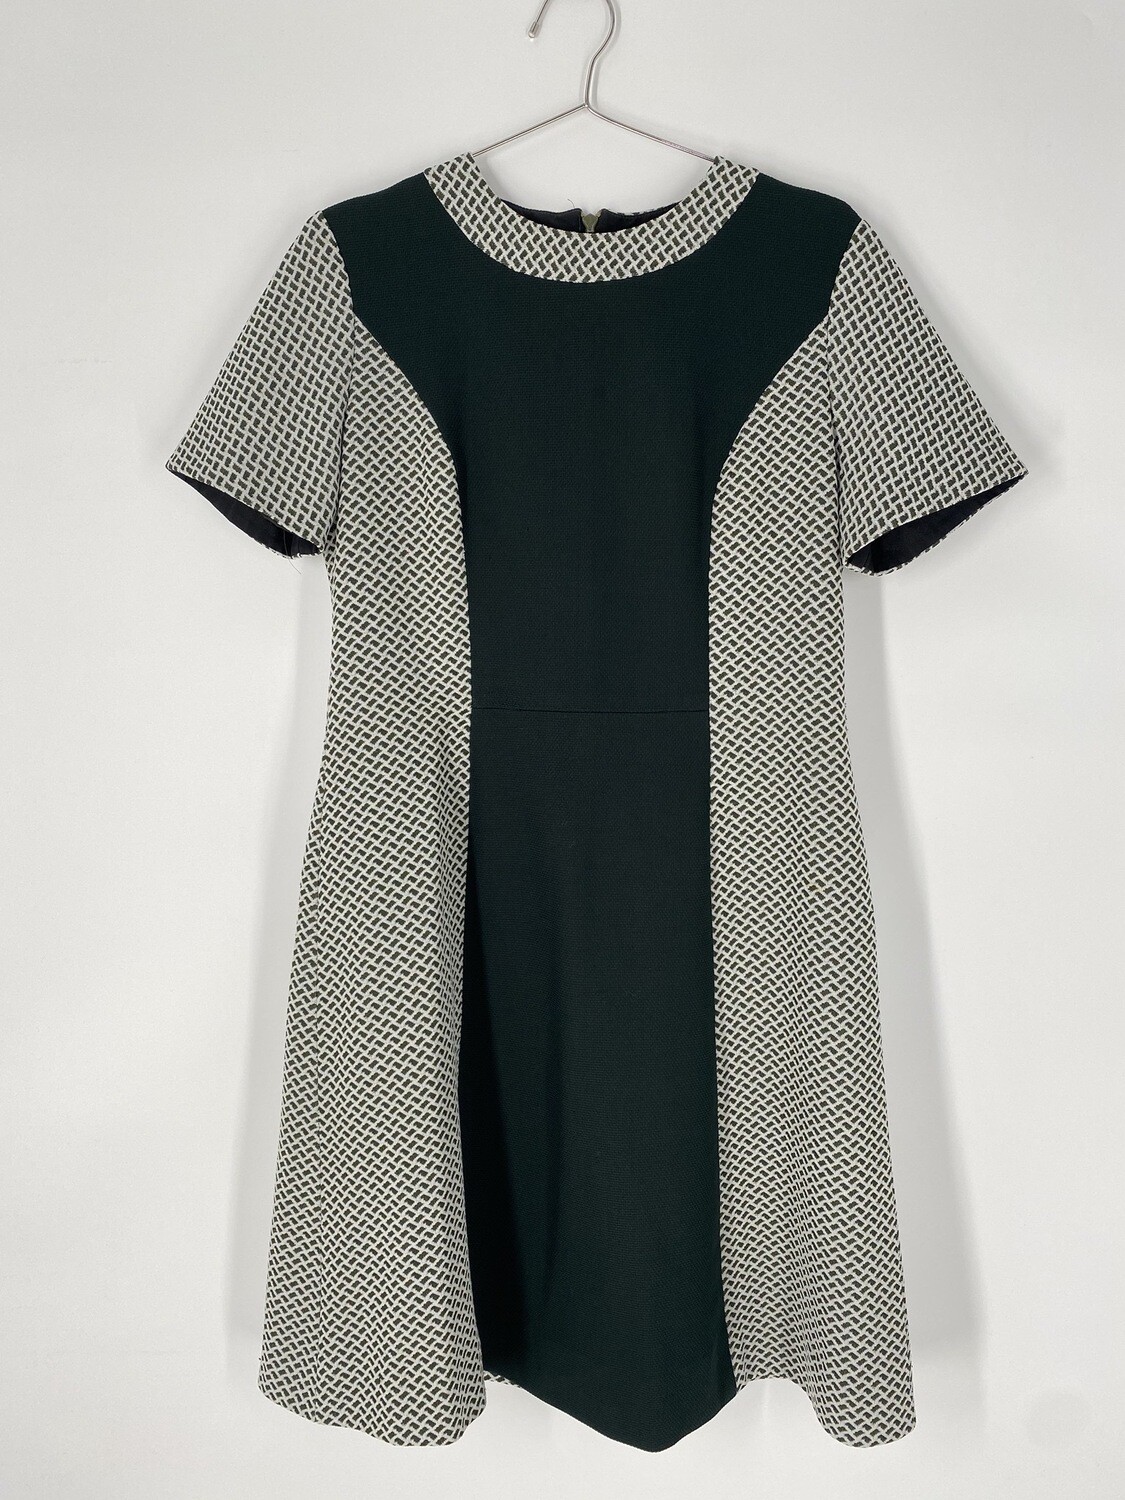 Short Sleeve Printed Dress Size M